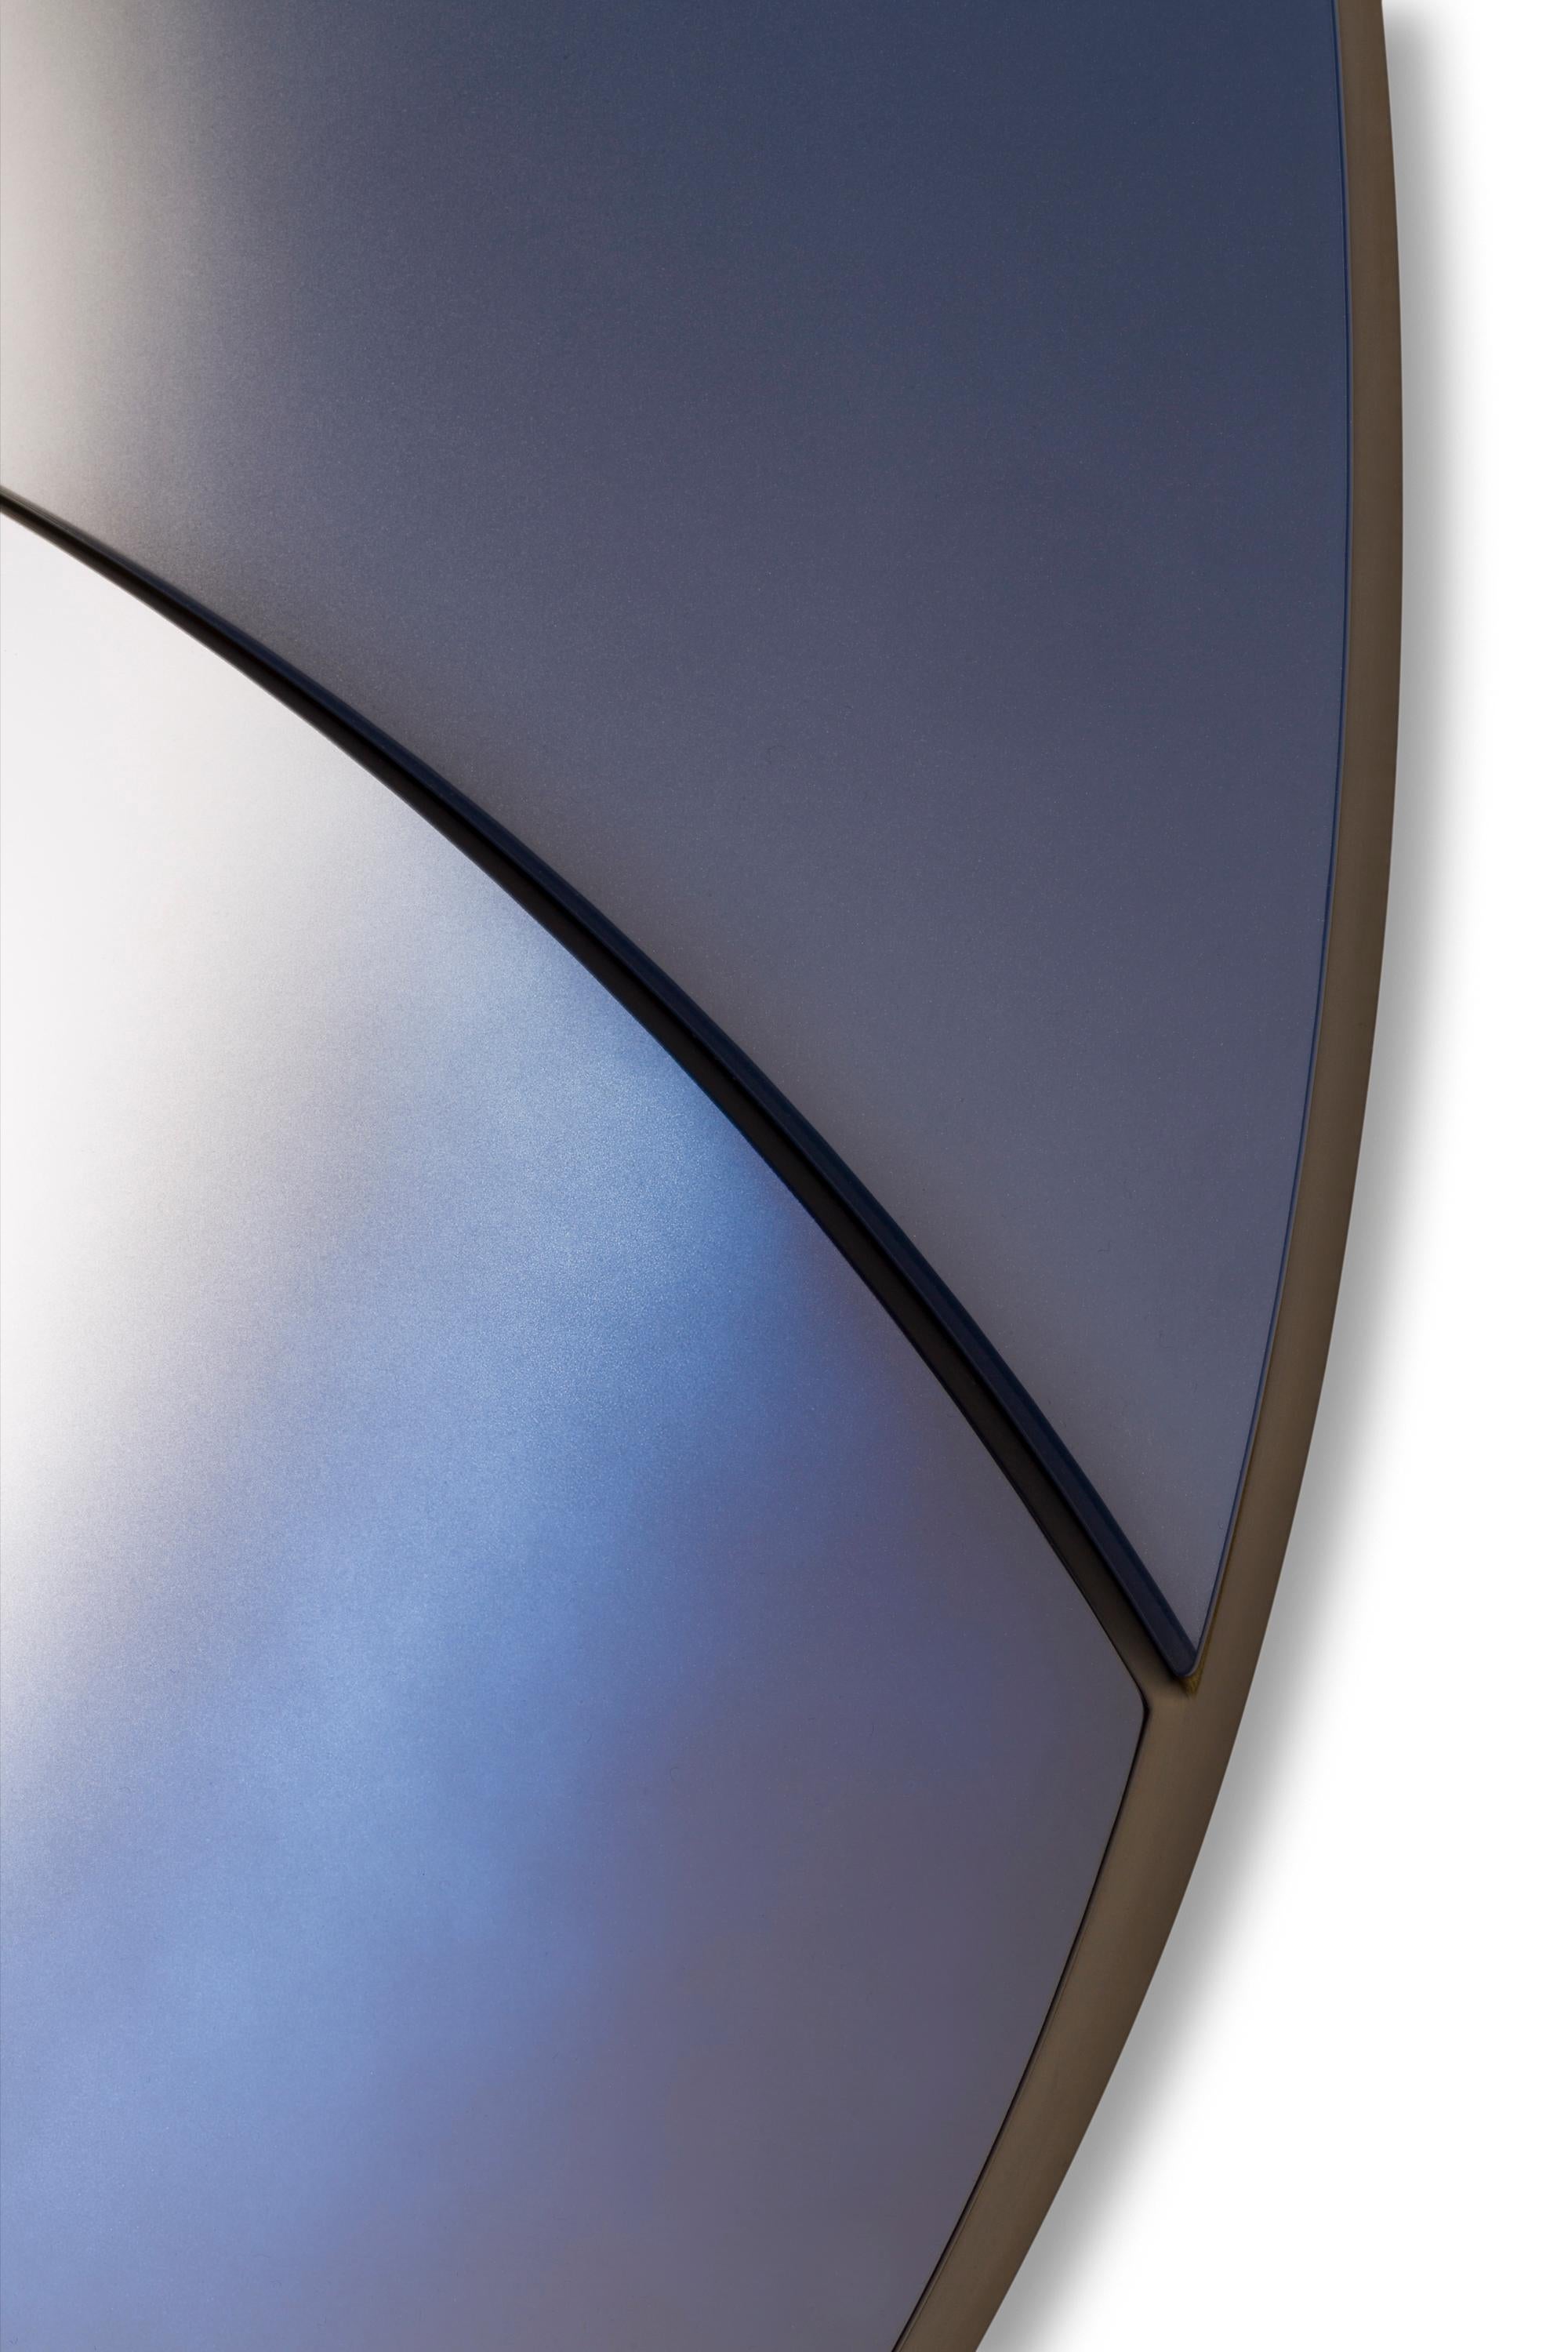 Trio mirror in blu shades- Oval shape 
Wood mirrored glass
Measure: 47.24